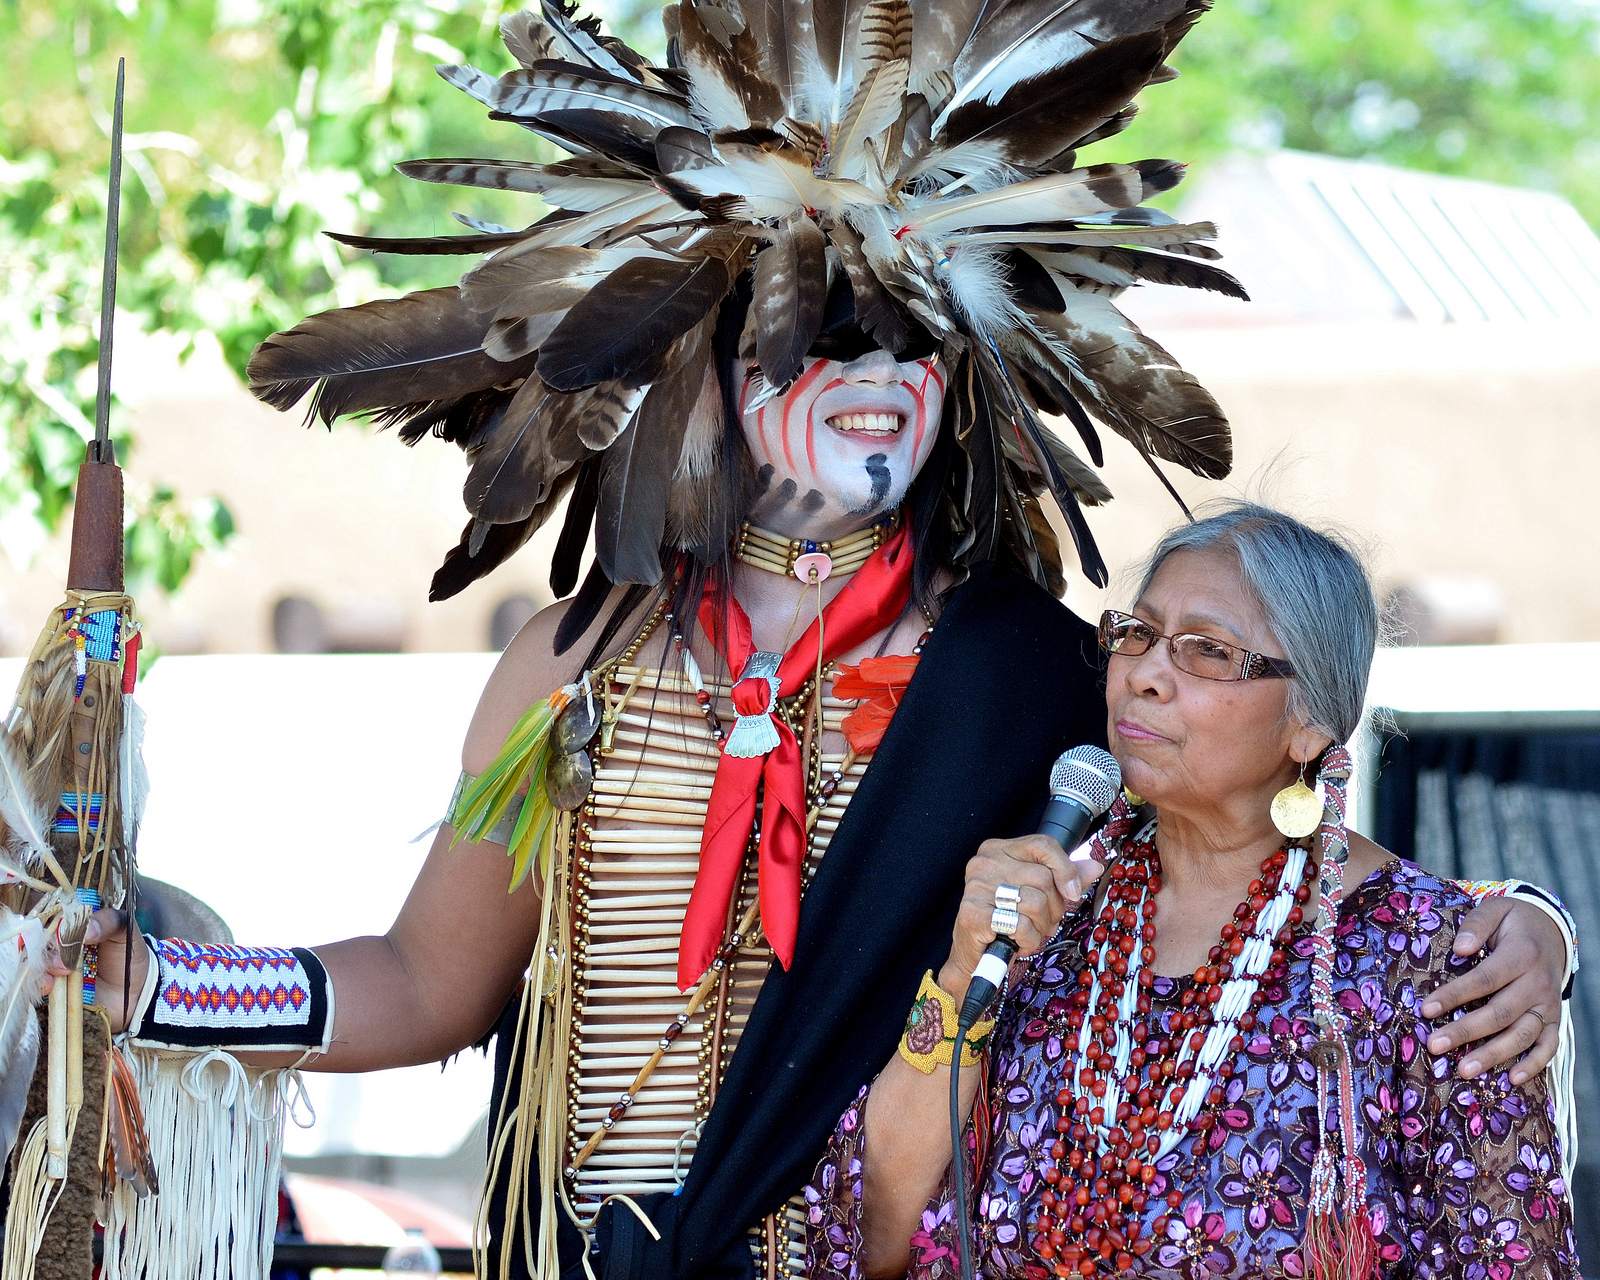 native american clothing11 Native American Clothing Contest at Santa Fe Indian Market